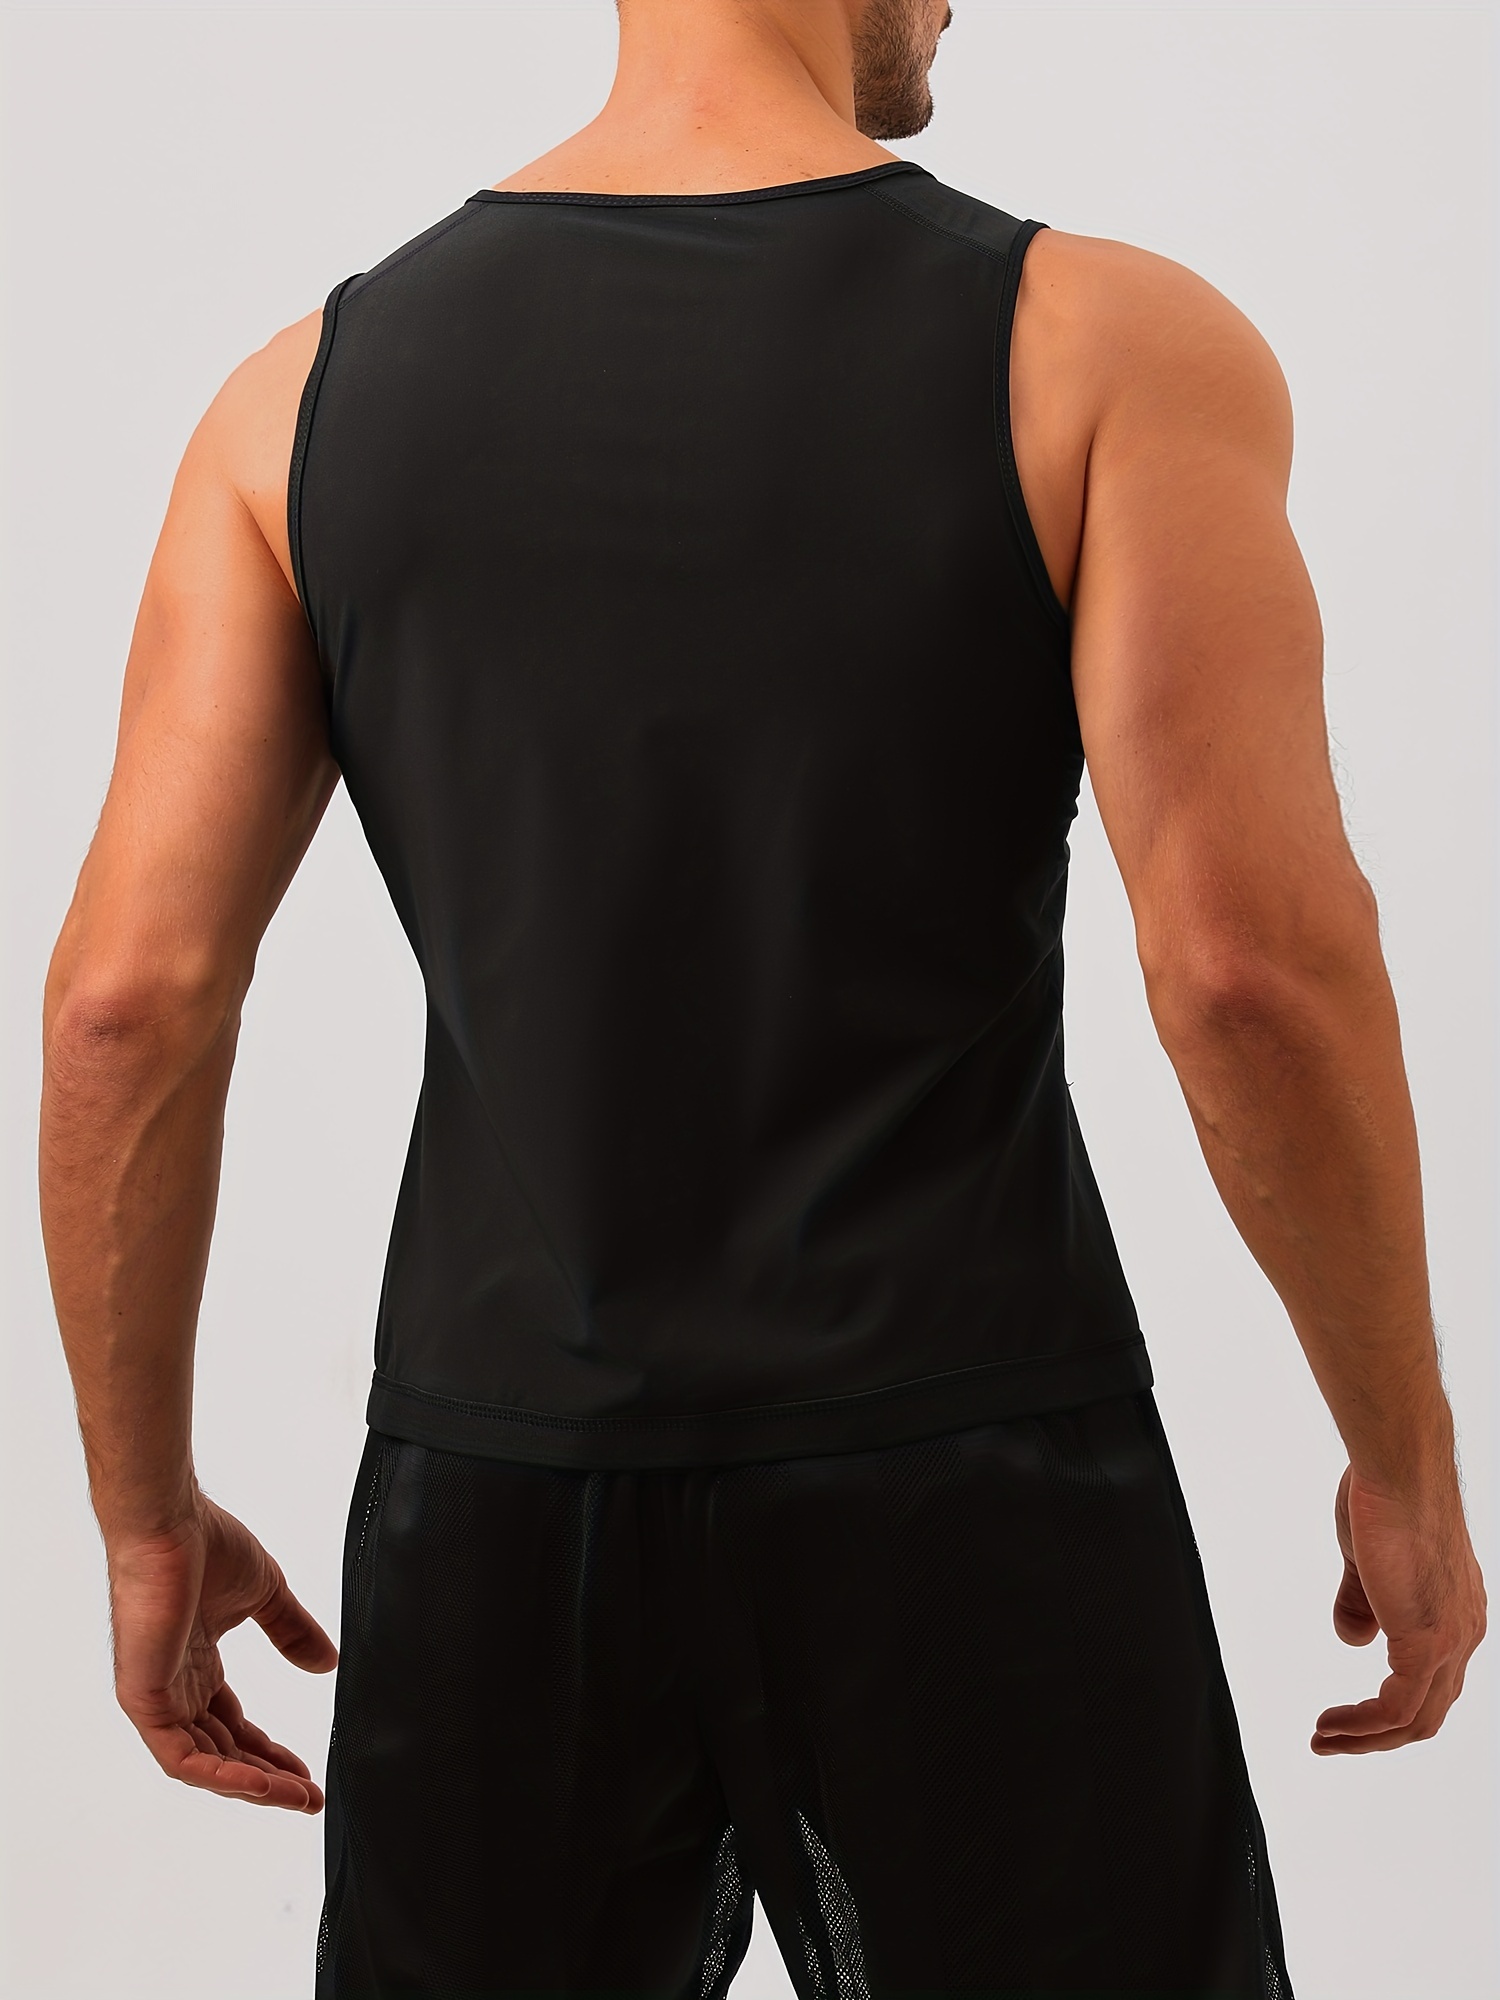 Men Compression Shirt Waist Trainer Body Shaper Slimming Tank Top Workout  Girdle Black S M